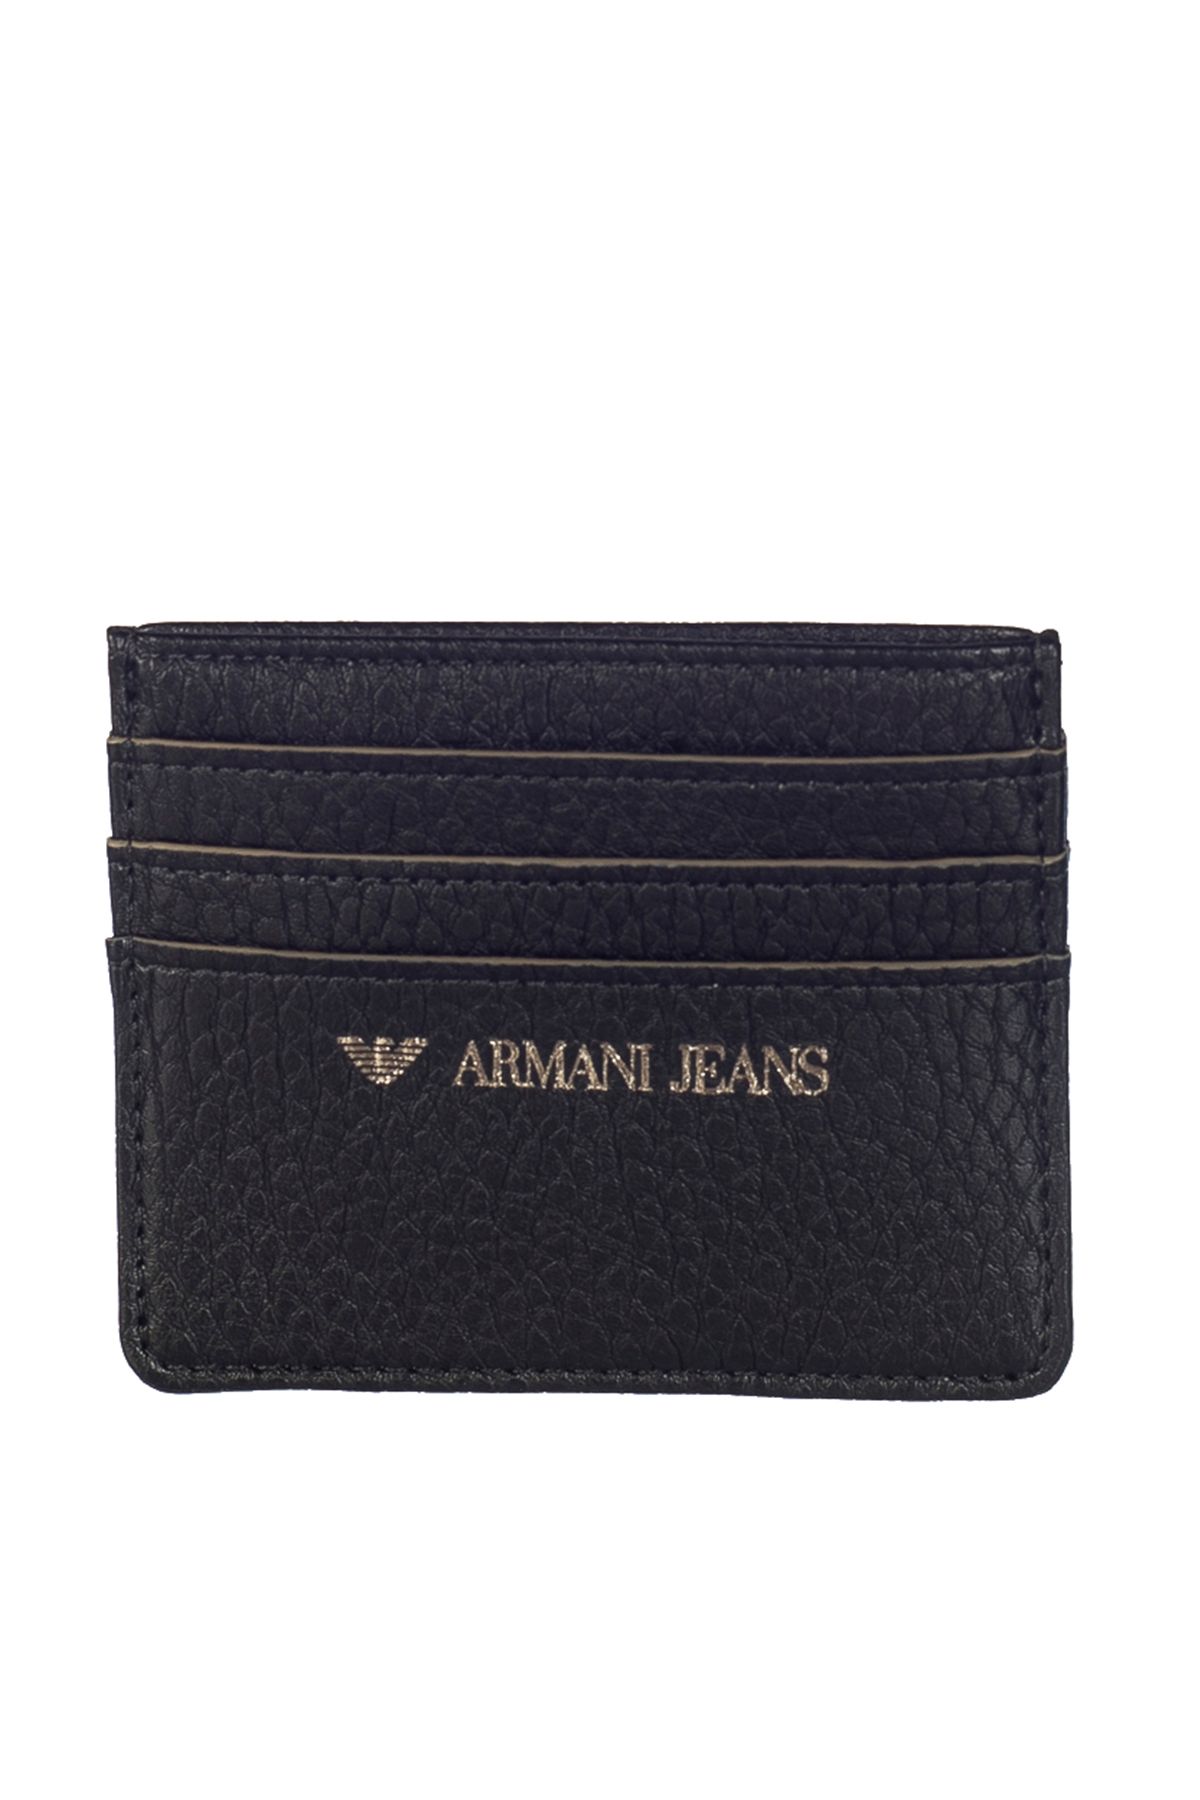 Armani Jeans Kadın 07320 Cüzdan 938004 6A903